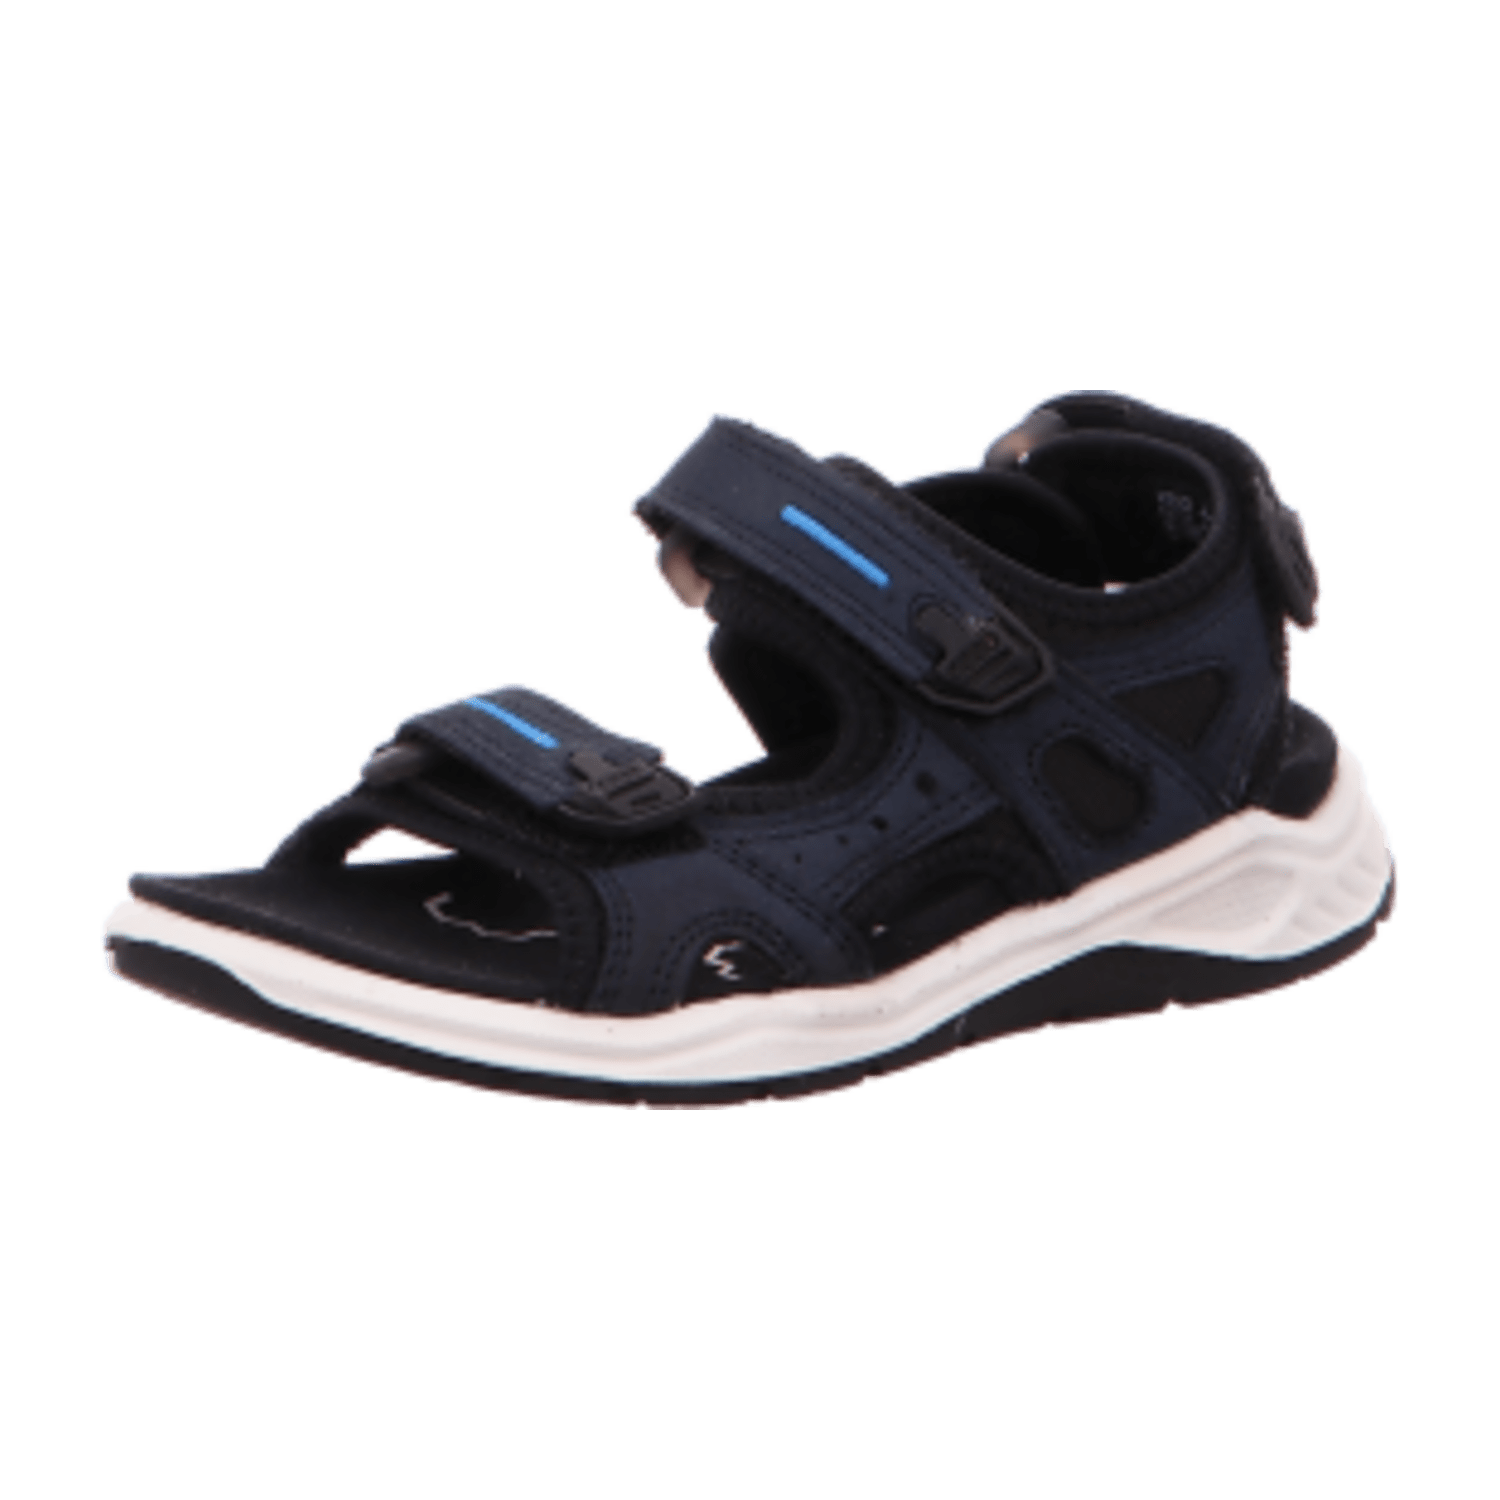 Ecco X-Trinsic Kinder Sandale dunkel-blau 710642